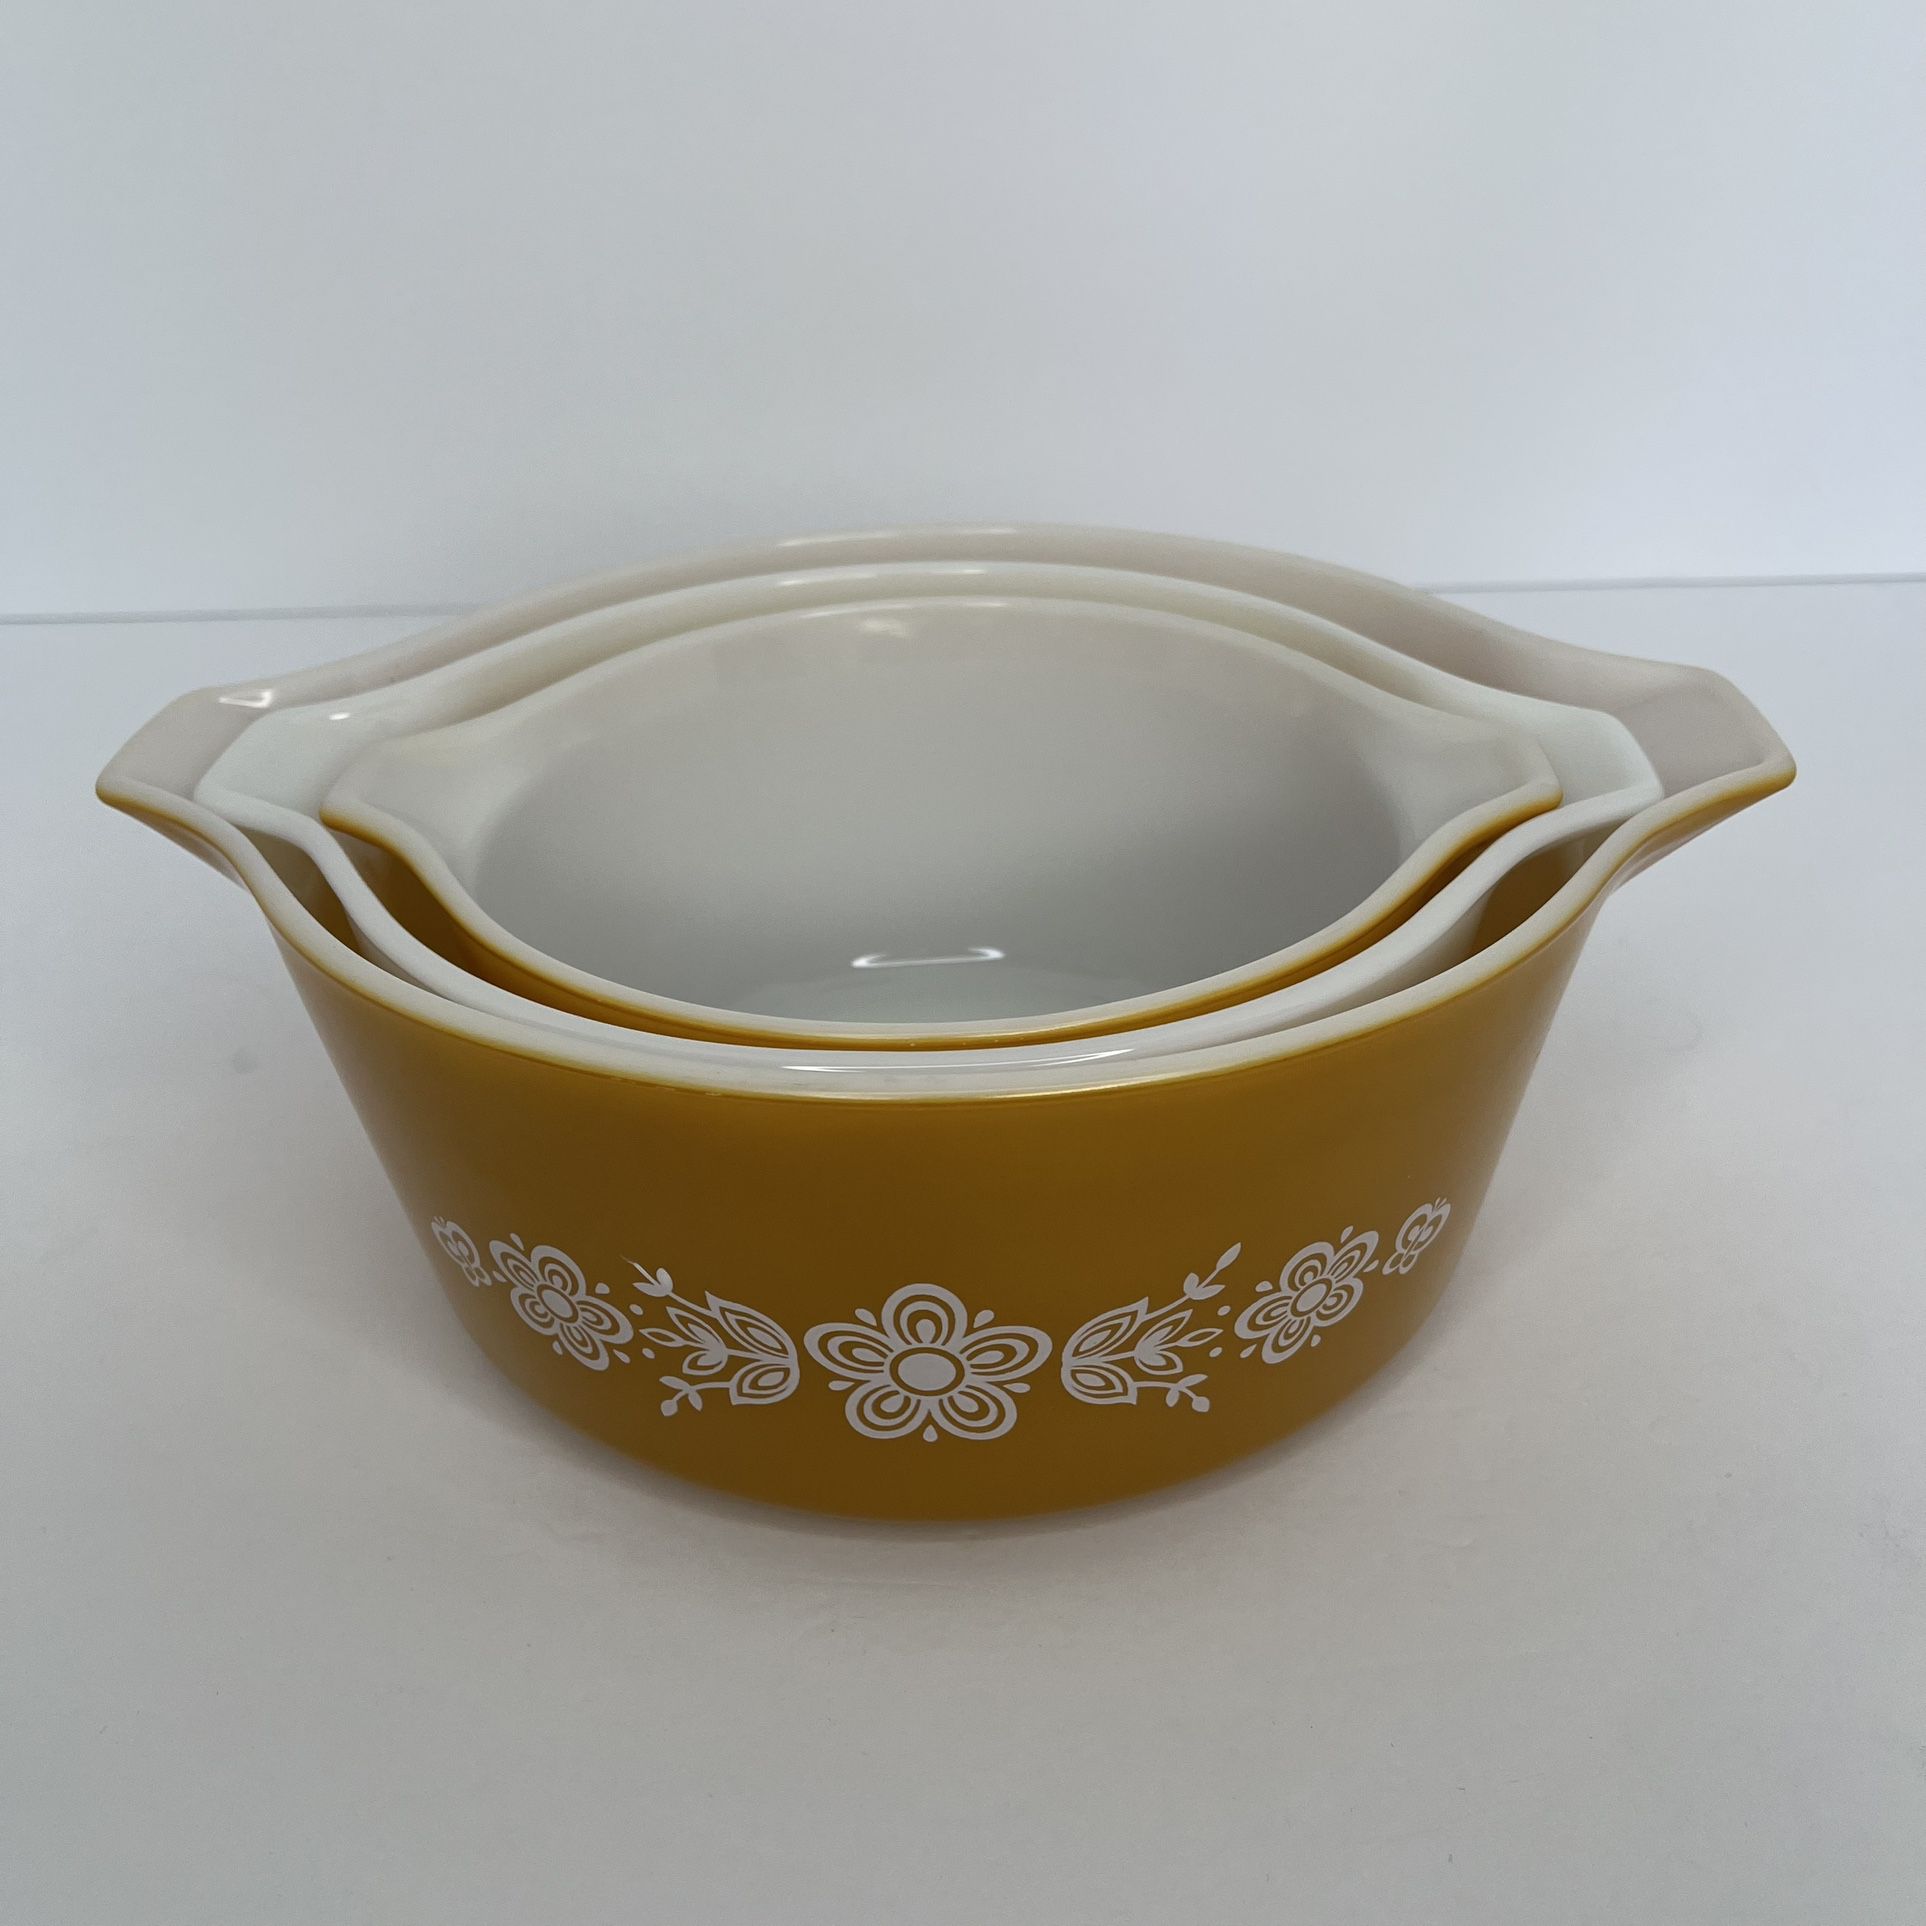 Vintage Pyrex Butterfly Gold Cinderella Casserole nesting set of 3 bowls